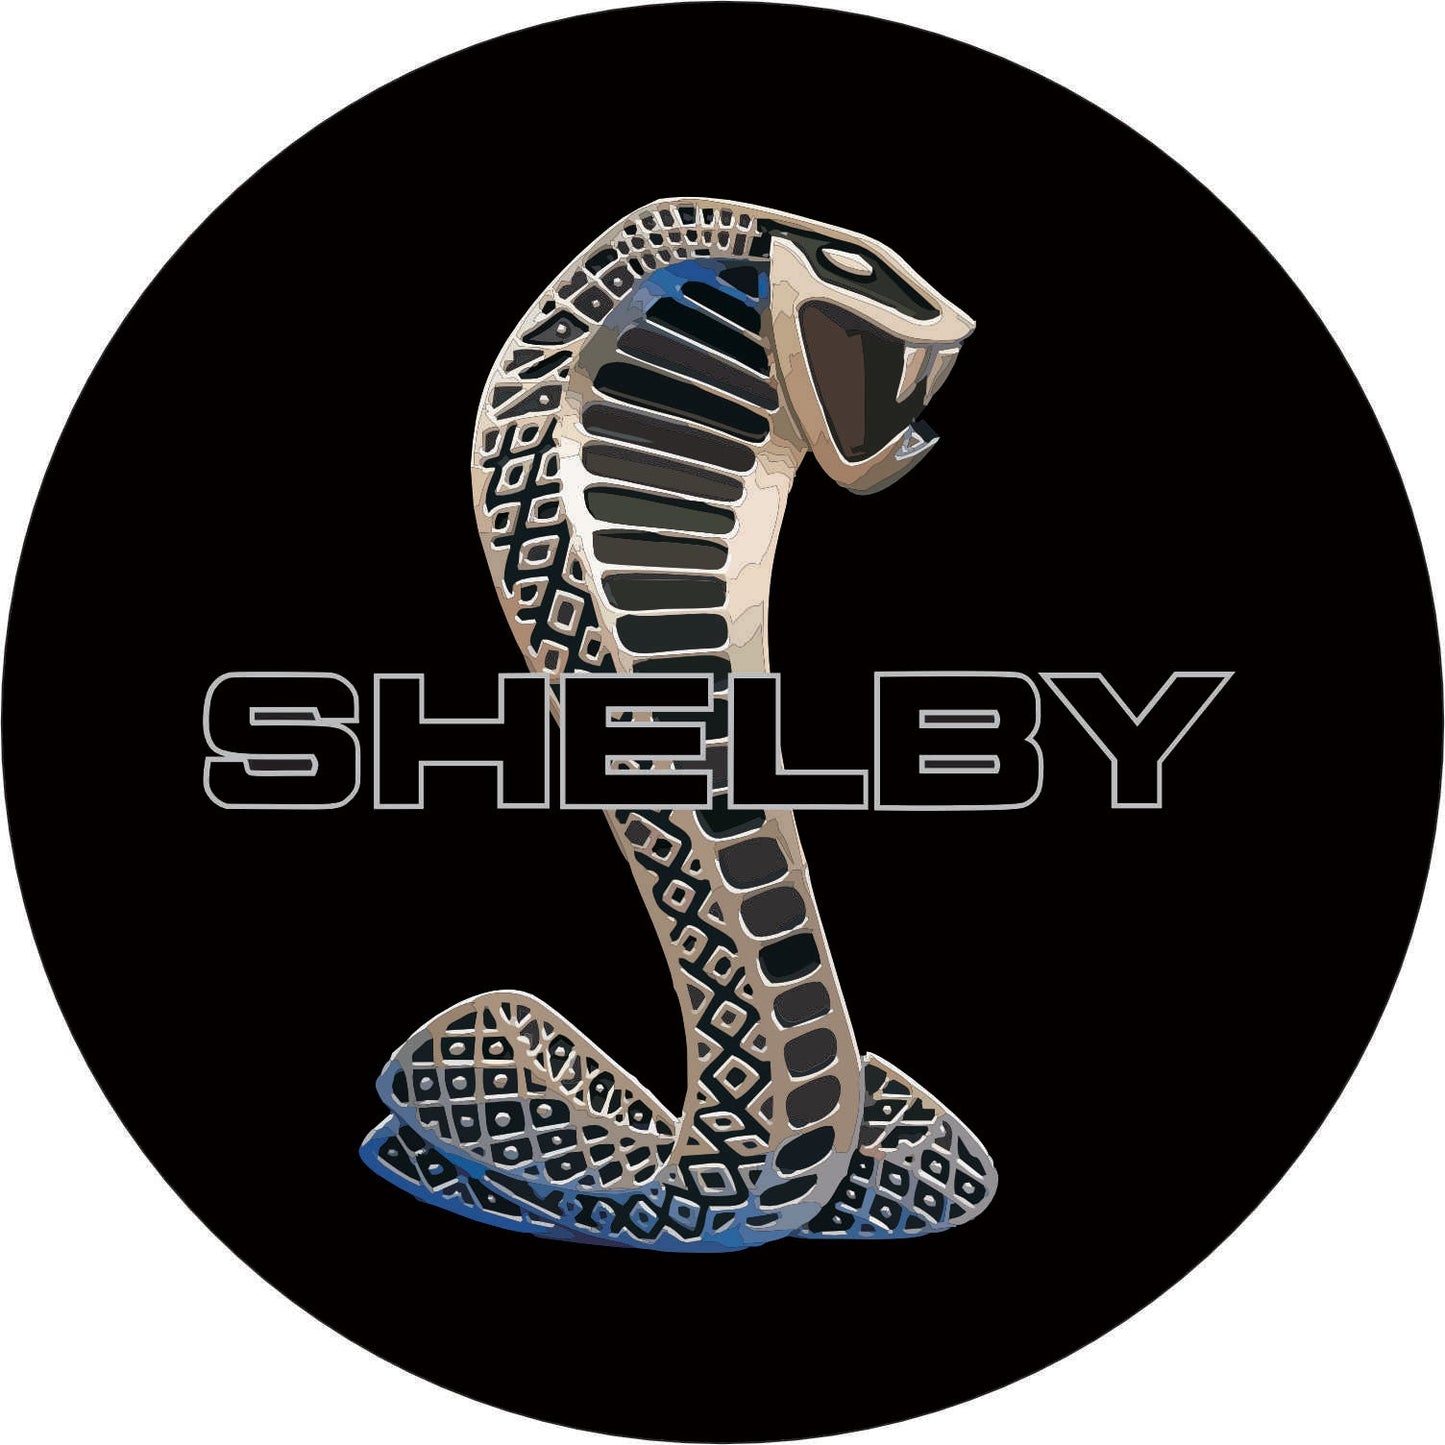 072-Single-sided illuminated sign - Ford Shelby